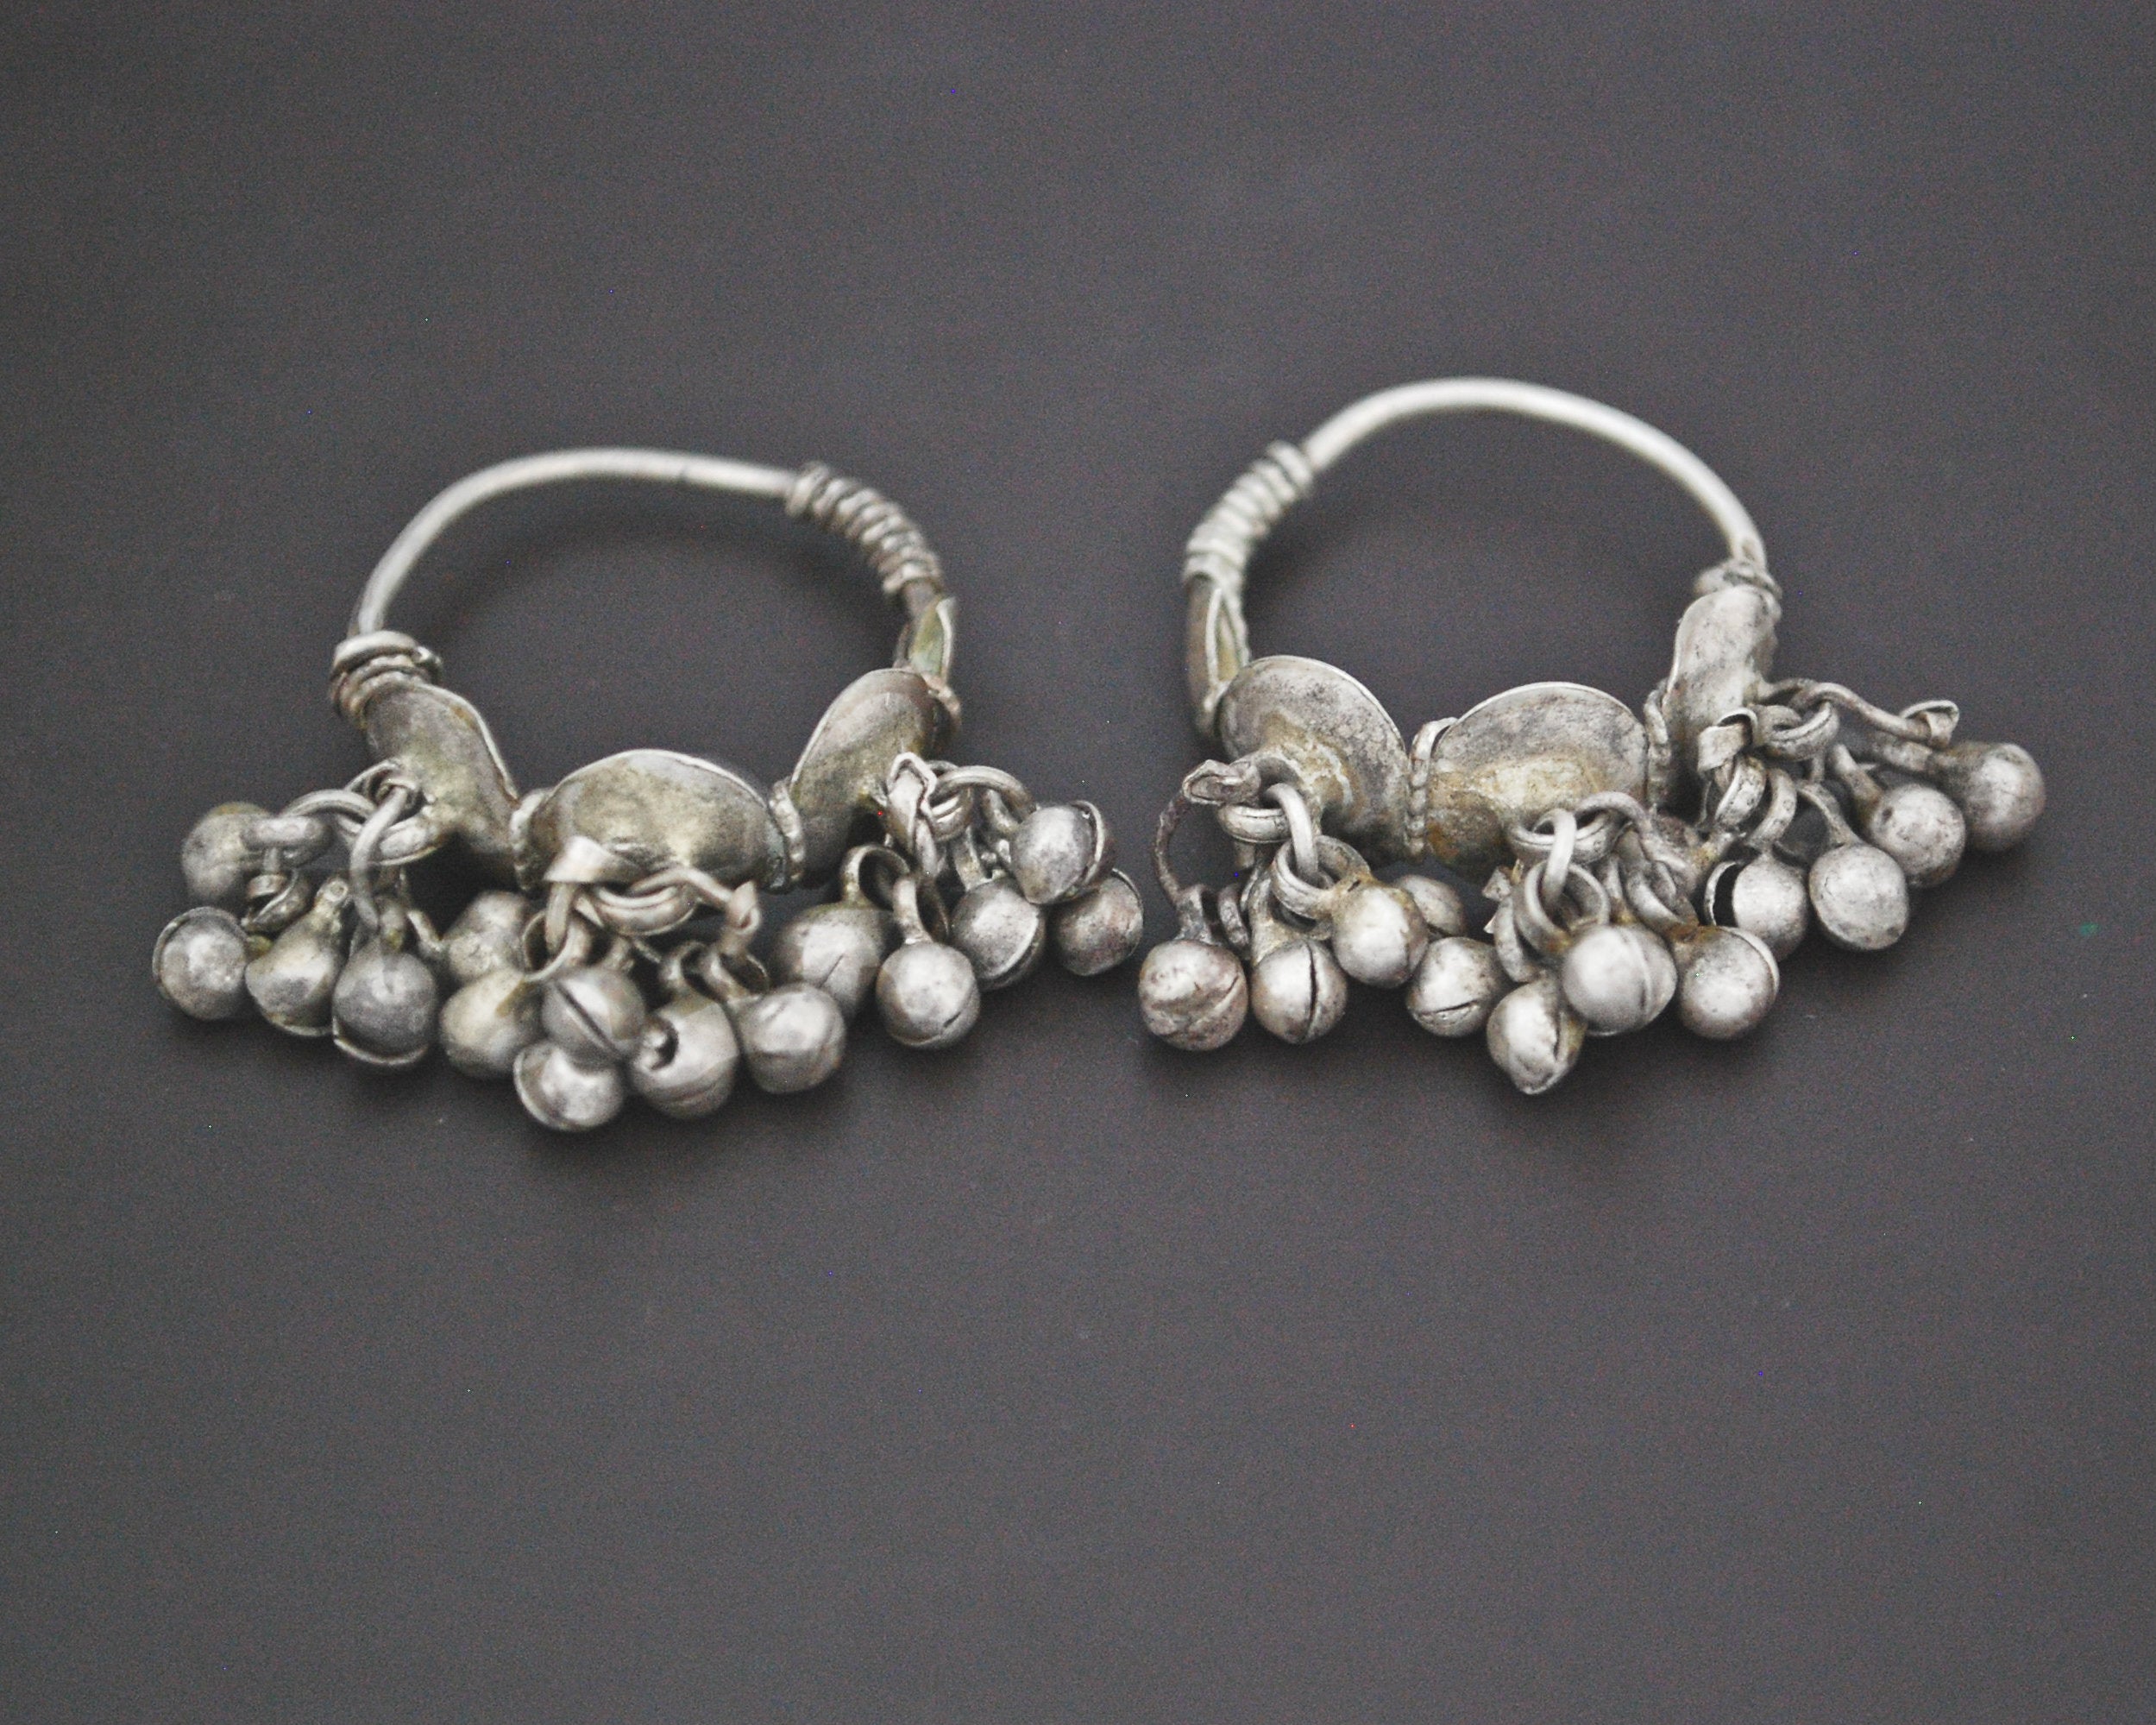 Rajasthani Hoop Earrings with Bells - SMALL